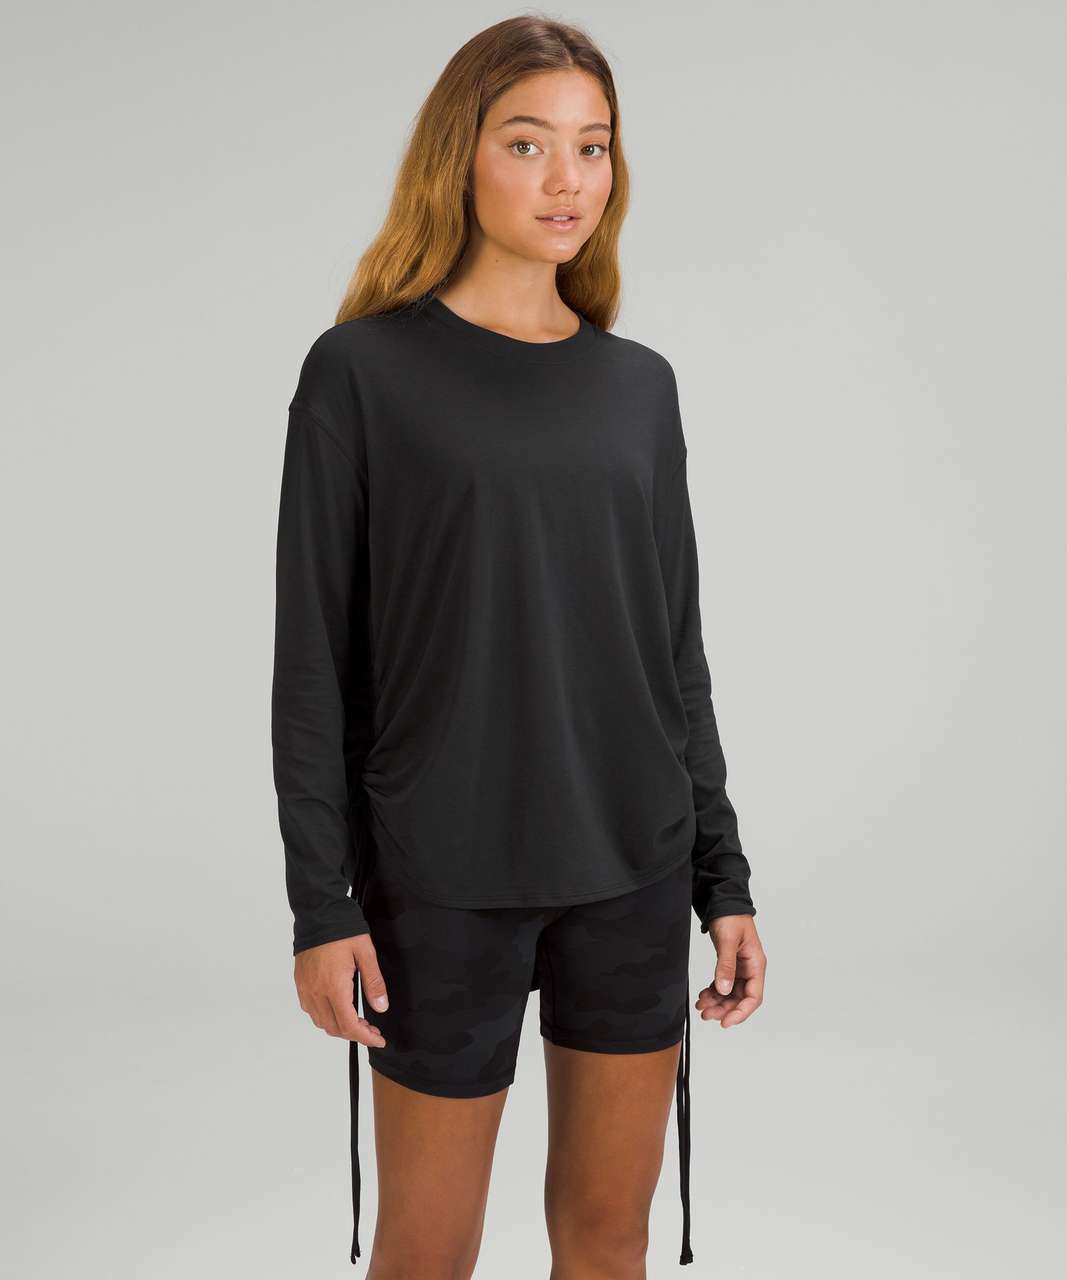 Lululemon Pima Cotton Side-Cinch Long Sleeve Shirt - Black